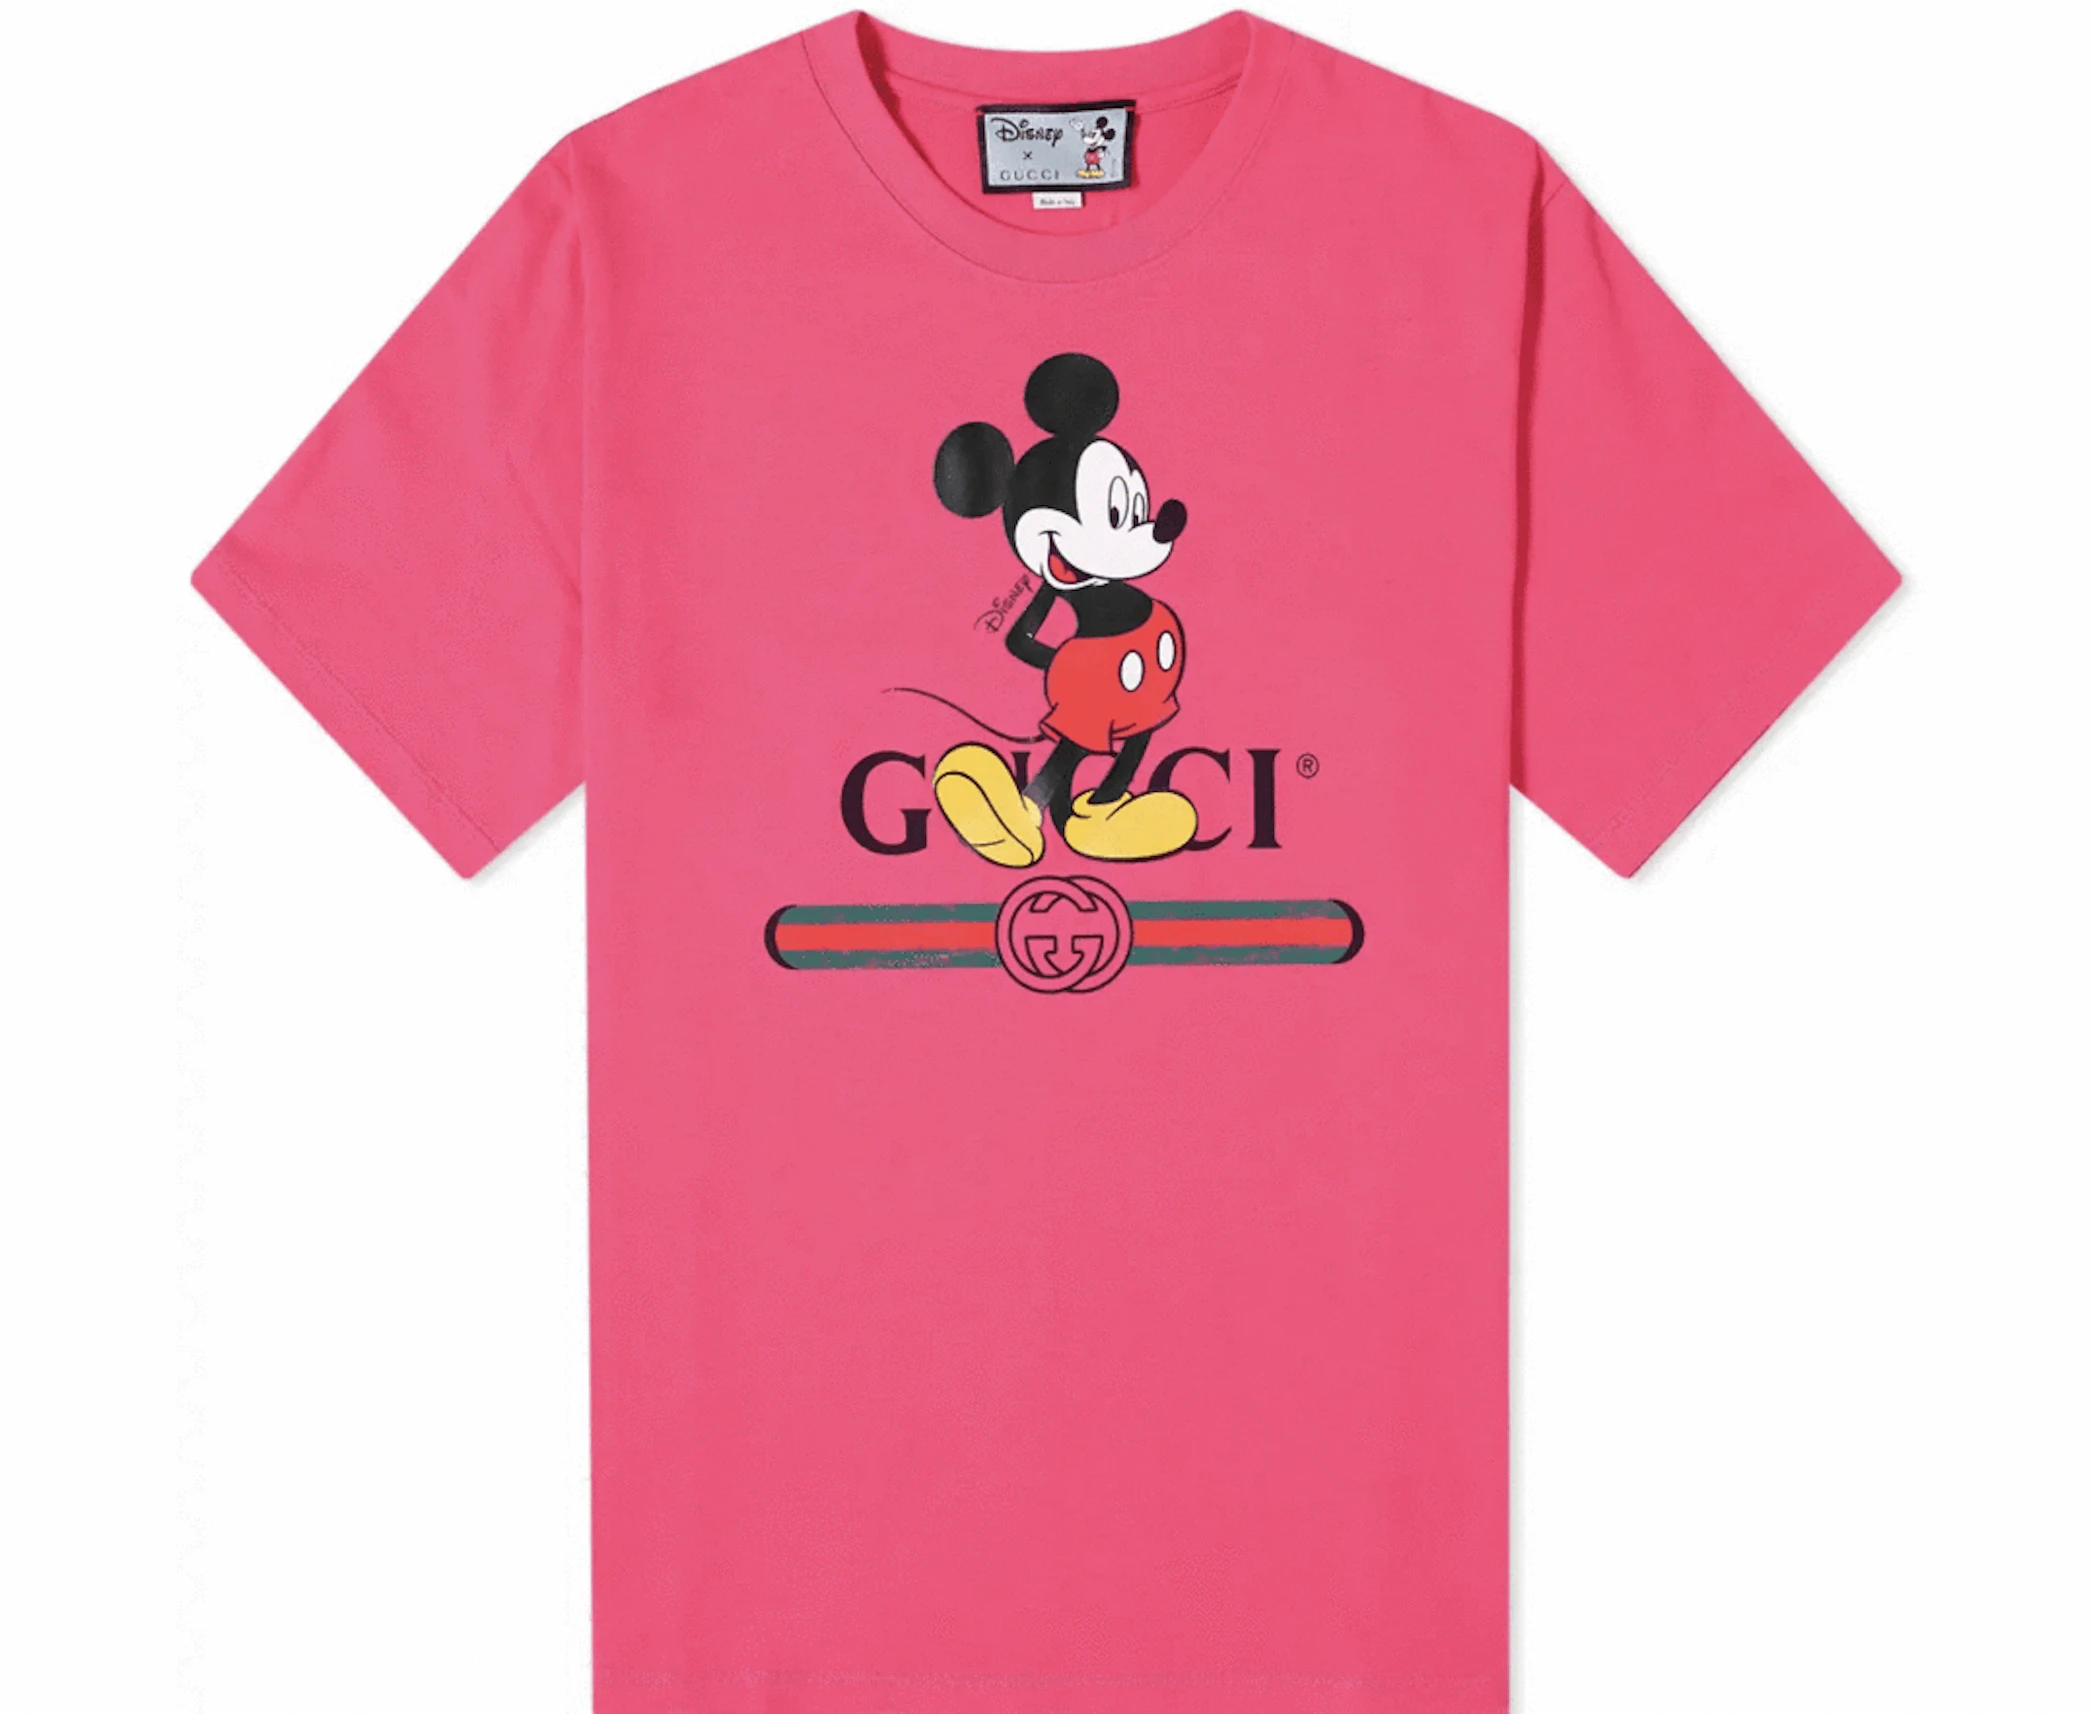 Gucci x Disney Mouse T-shirt -